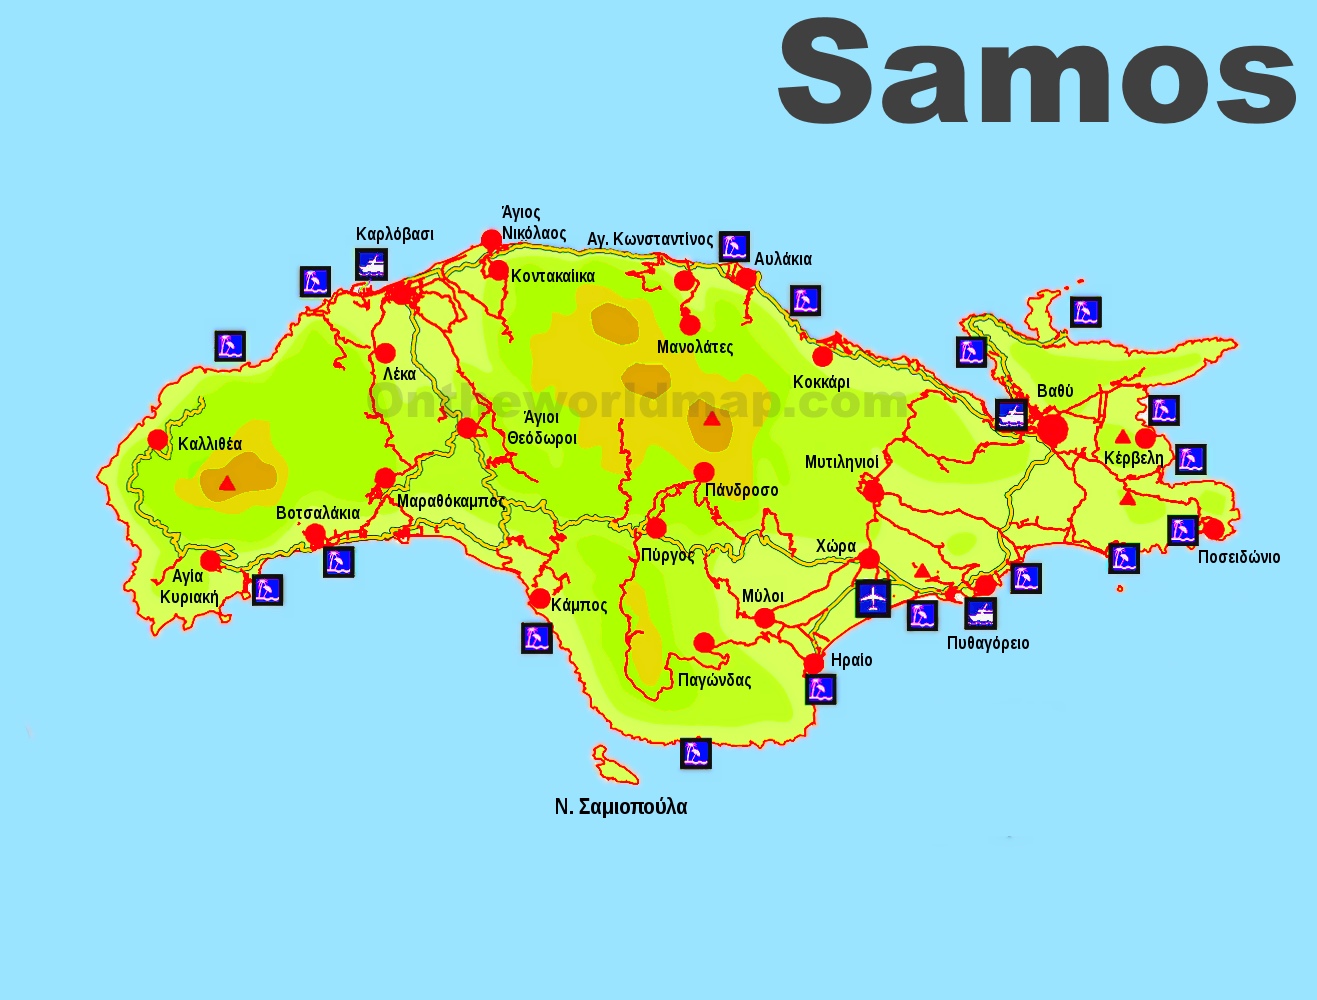 samos-beaches-map.jpg